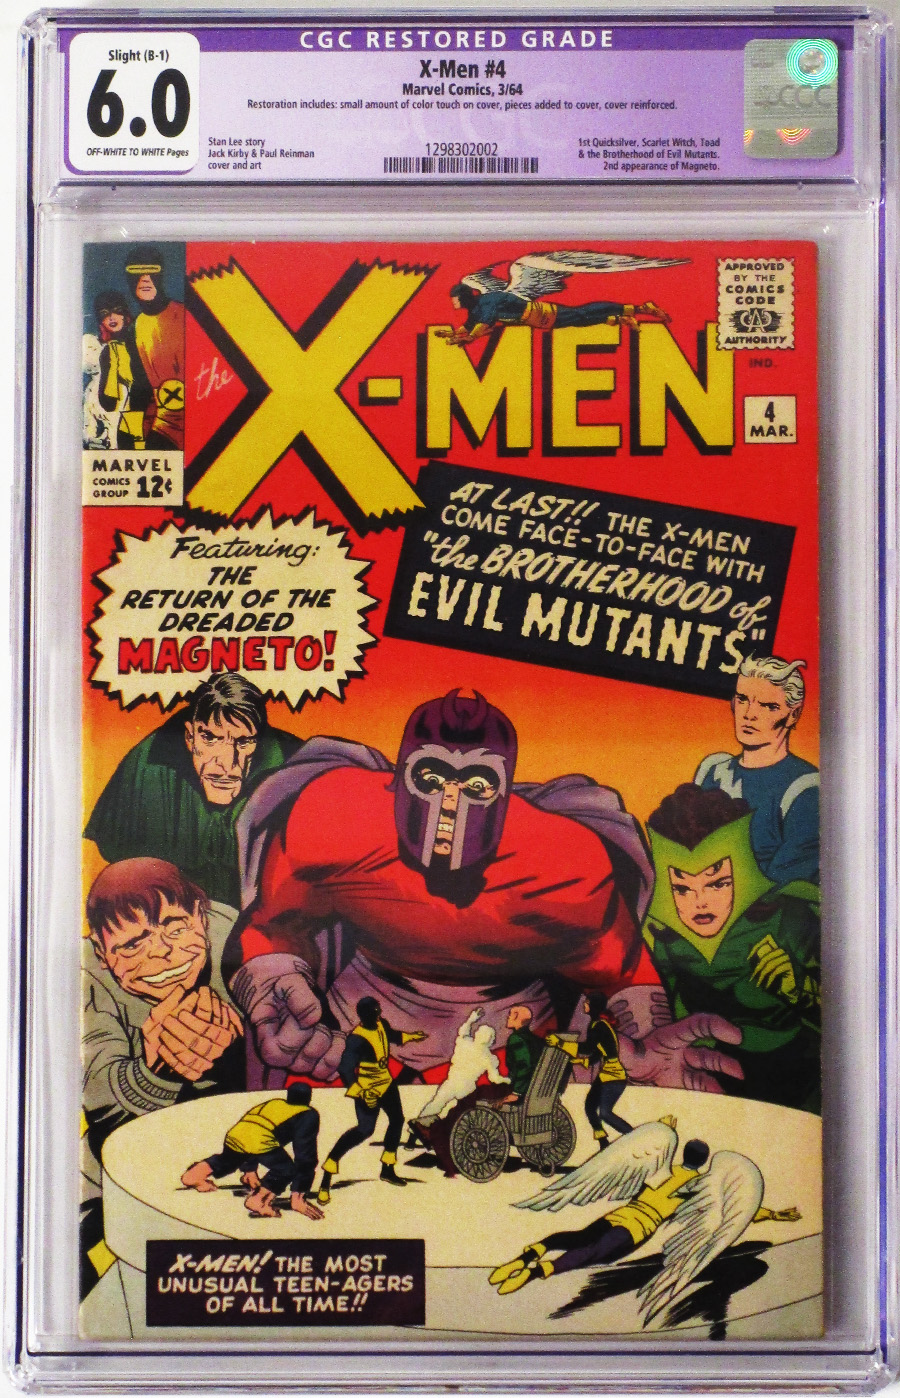 X-Men Vol 1 #4 Cover C CGC Graded 6.0